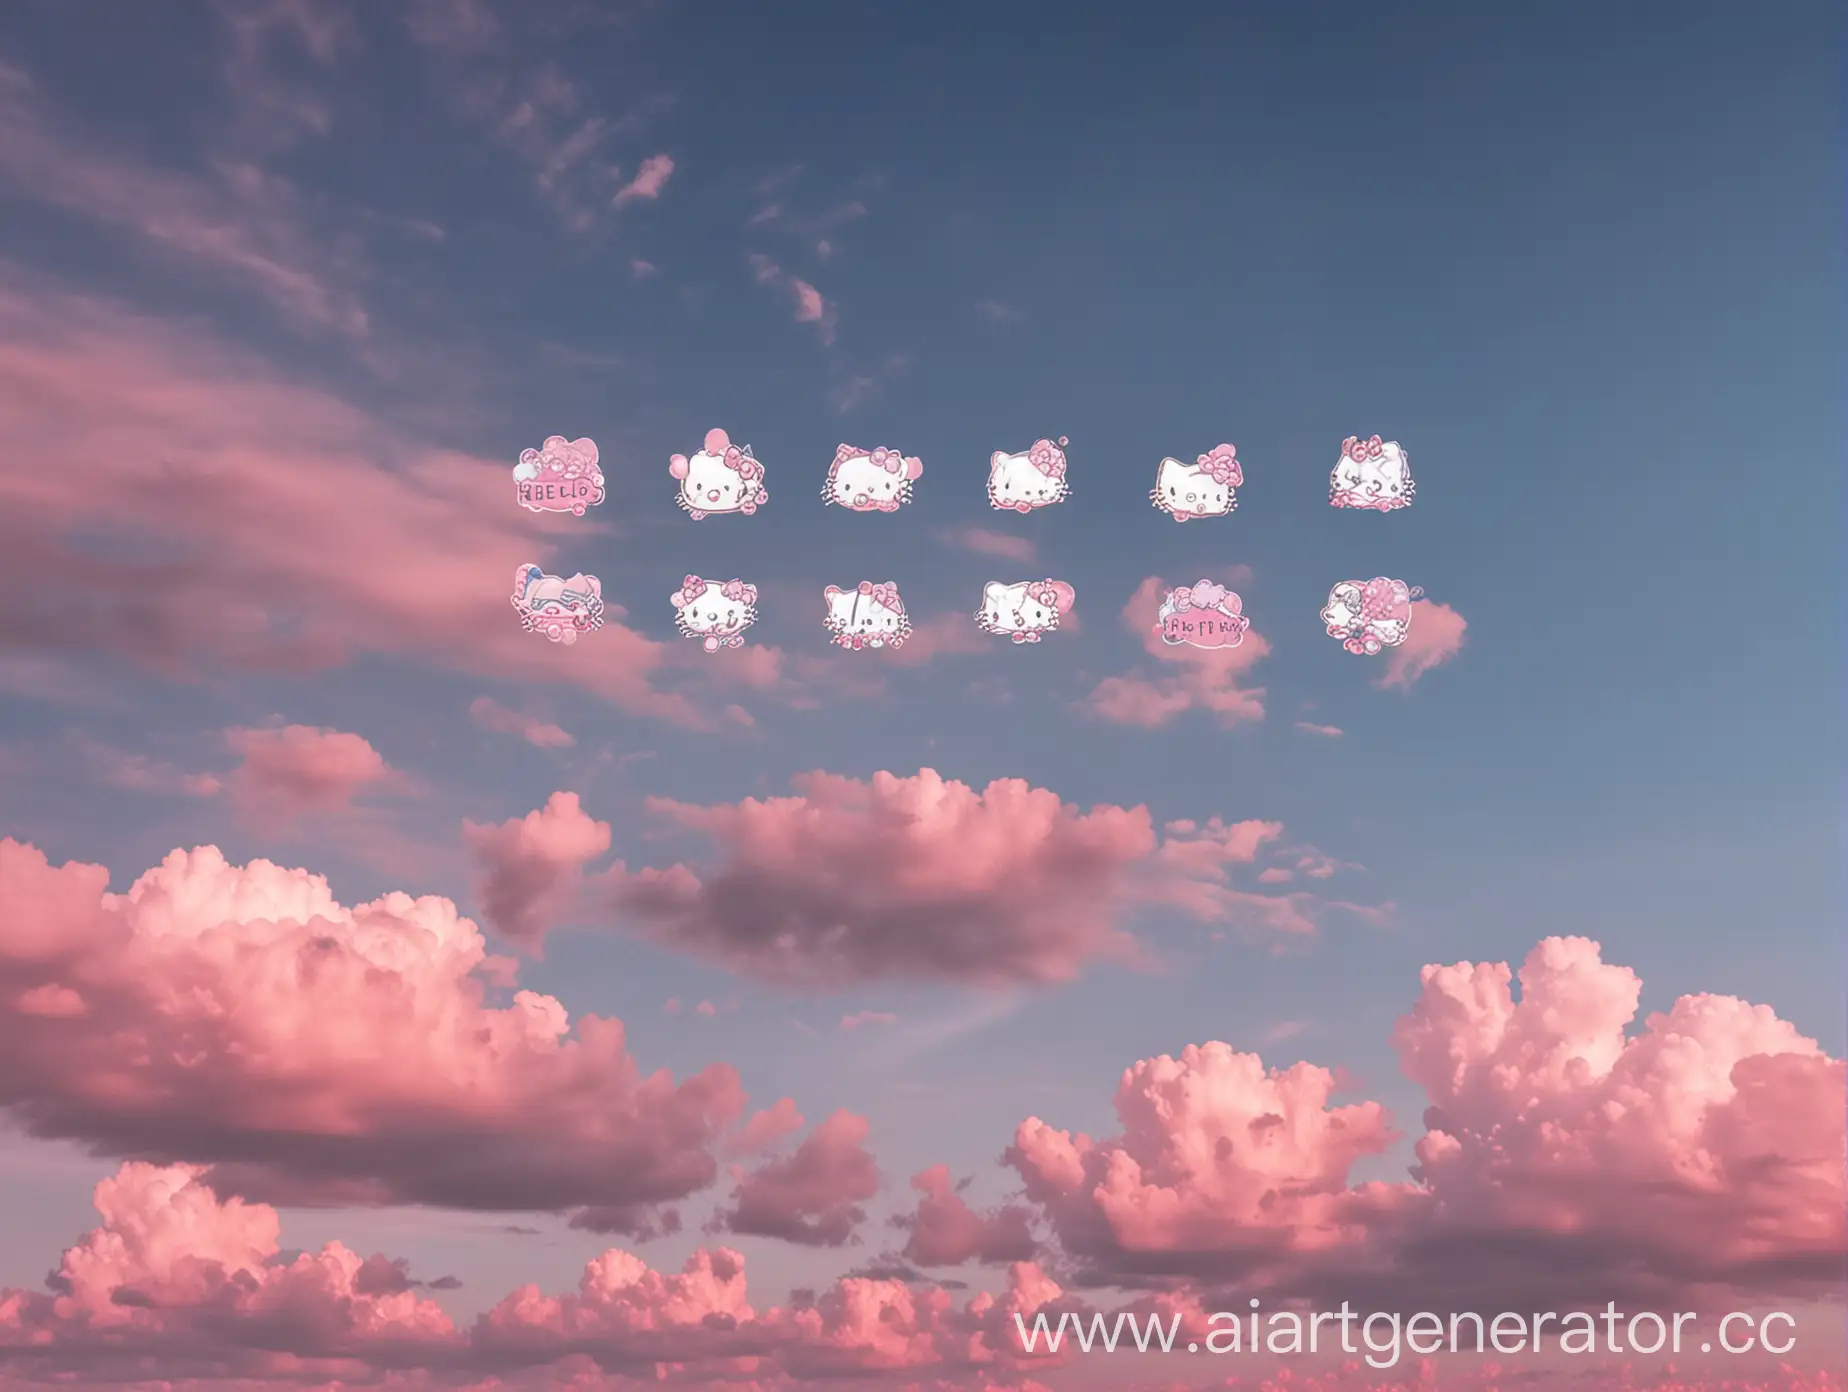 a big blue pinkish sky with 7 small cute clouds shaped like hello kitty